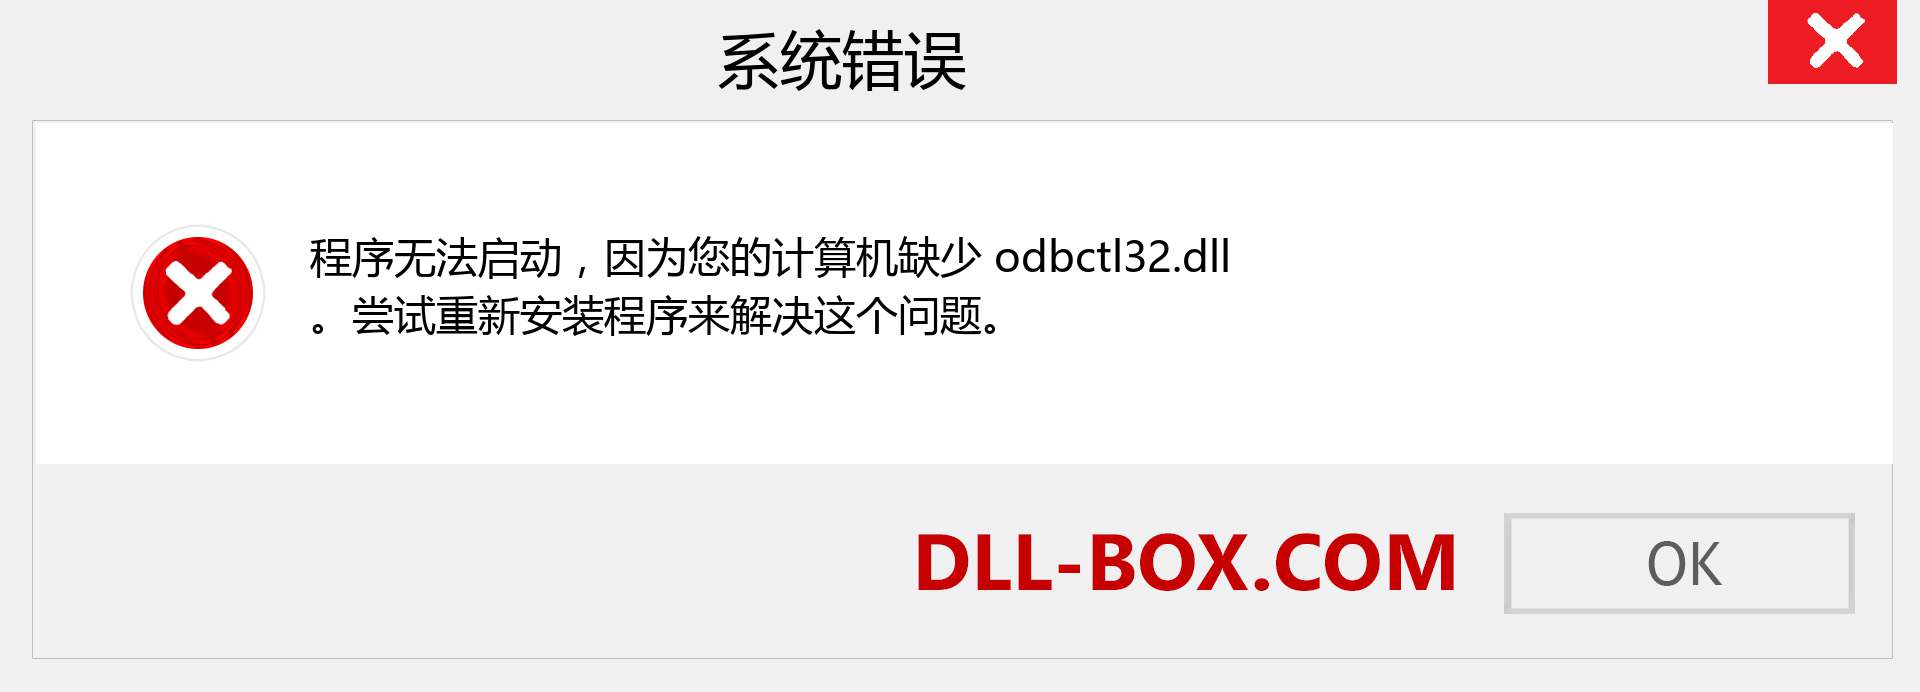 odbctl32.dll 文件丢失？。 适用于 Windows 7、8、10 的下载 - 修复 Windows、照片、图像上的 odbctl32 dll 丢失错误